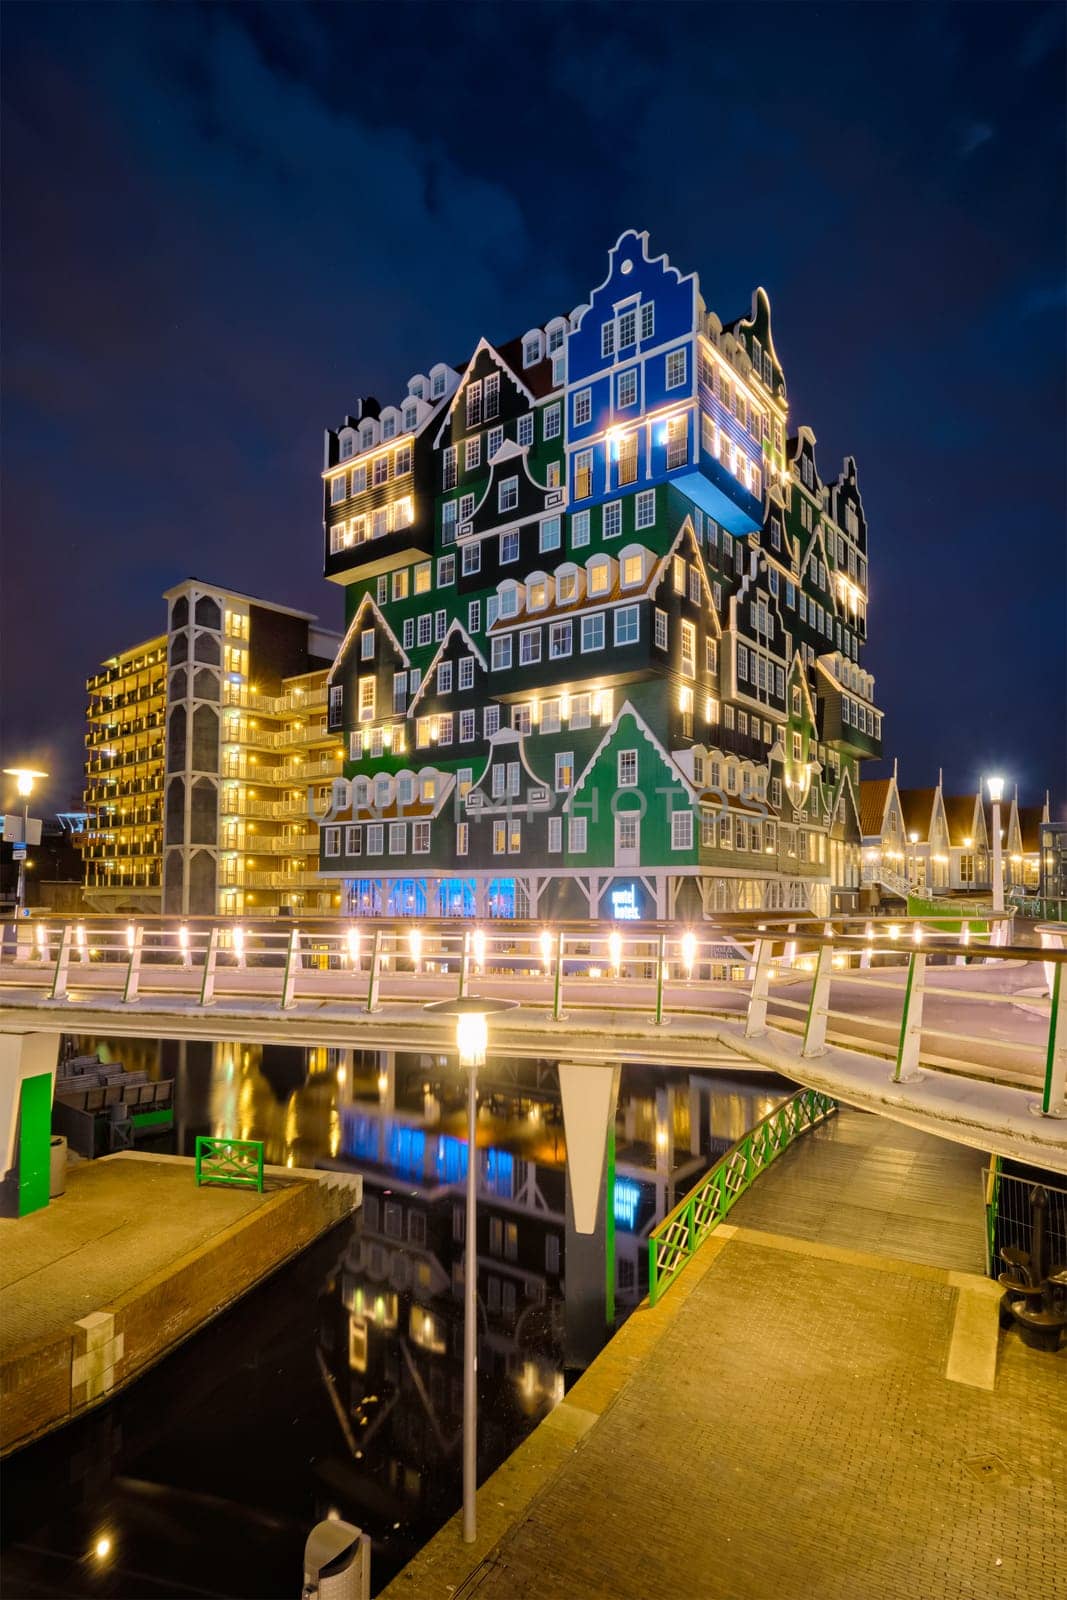 Inntel Hotel in Zaandam illuminated at night, Netherlands by dimol